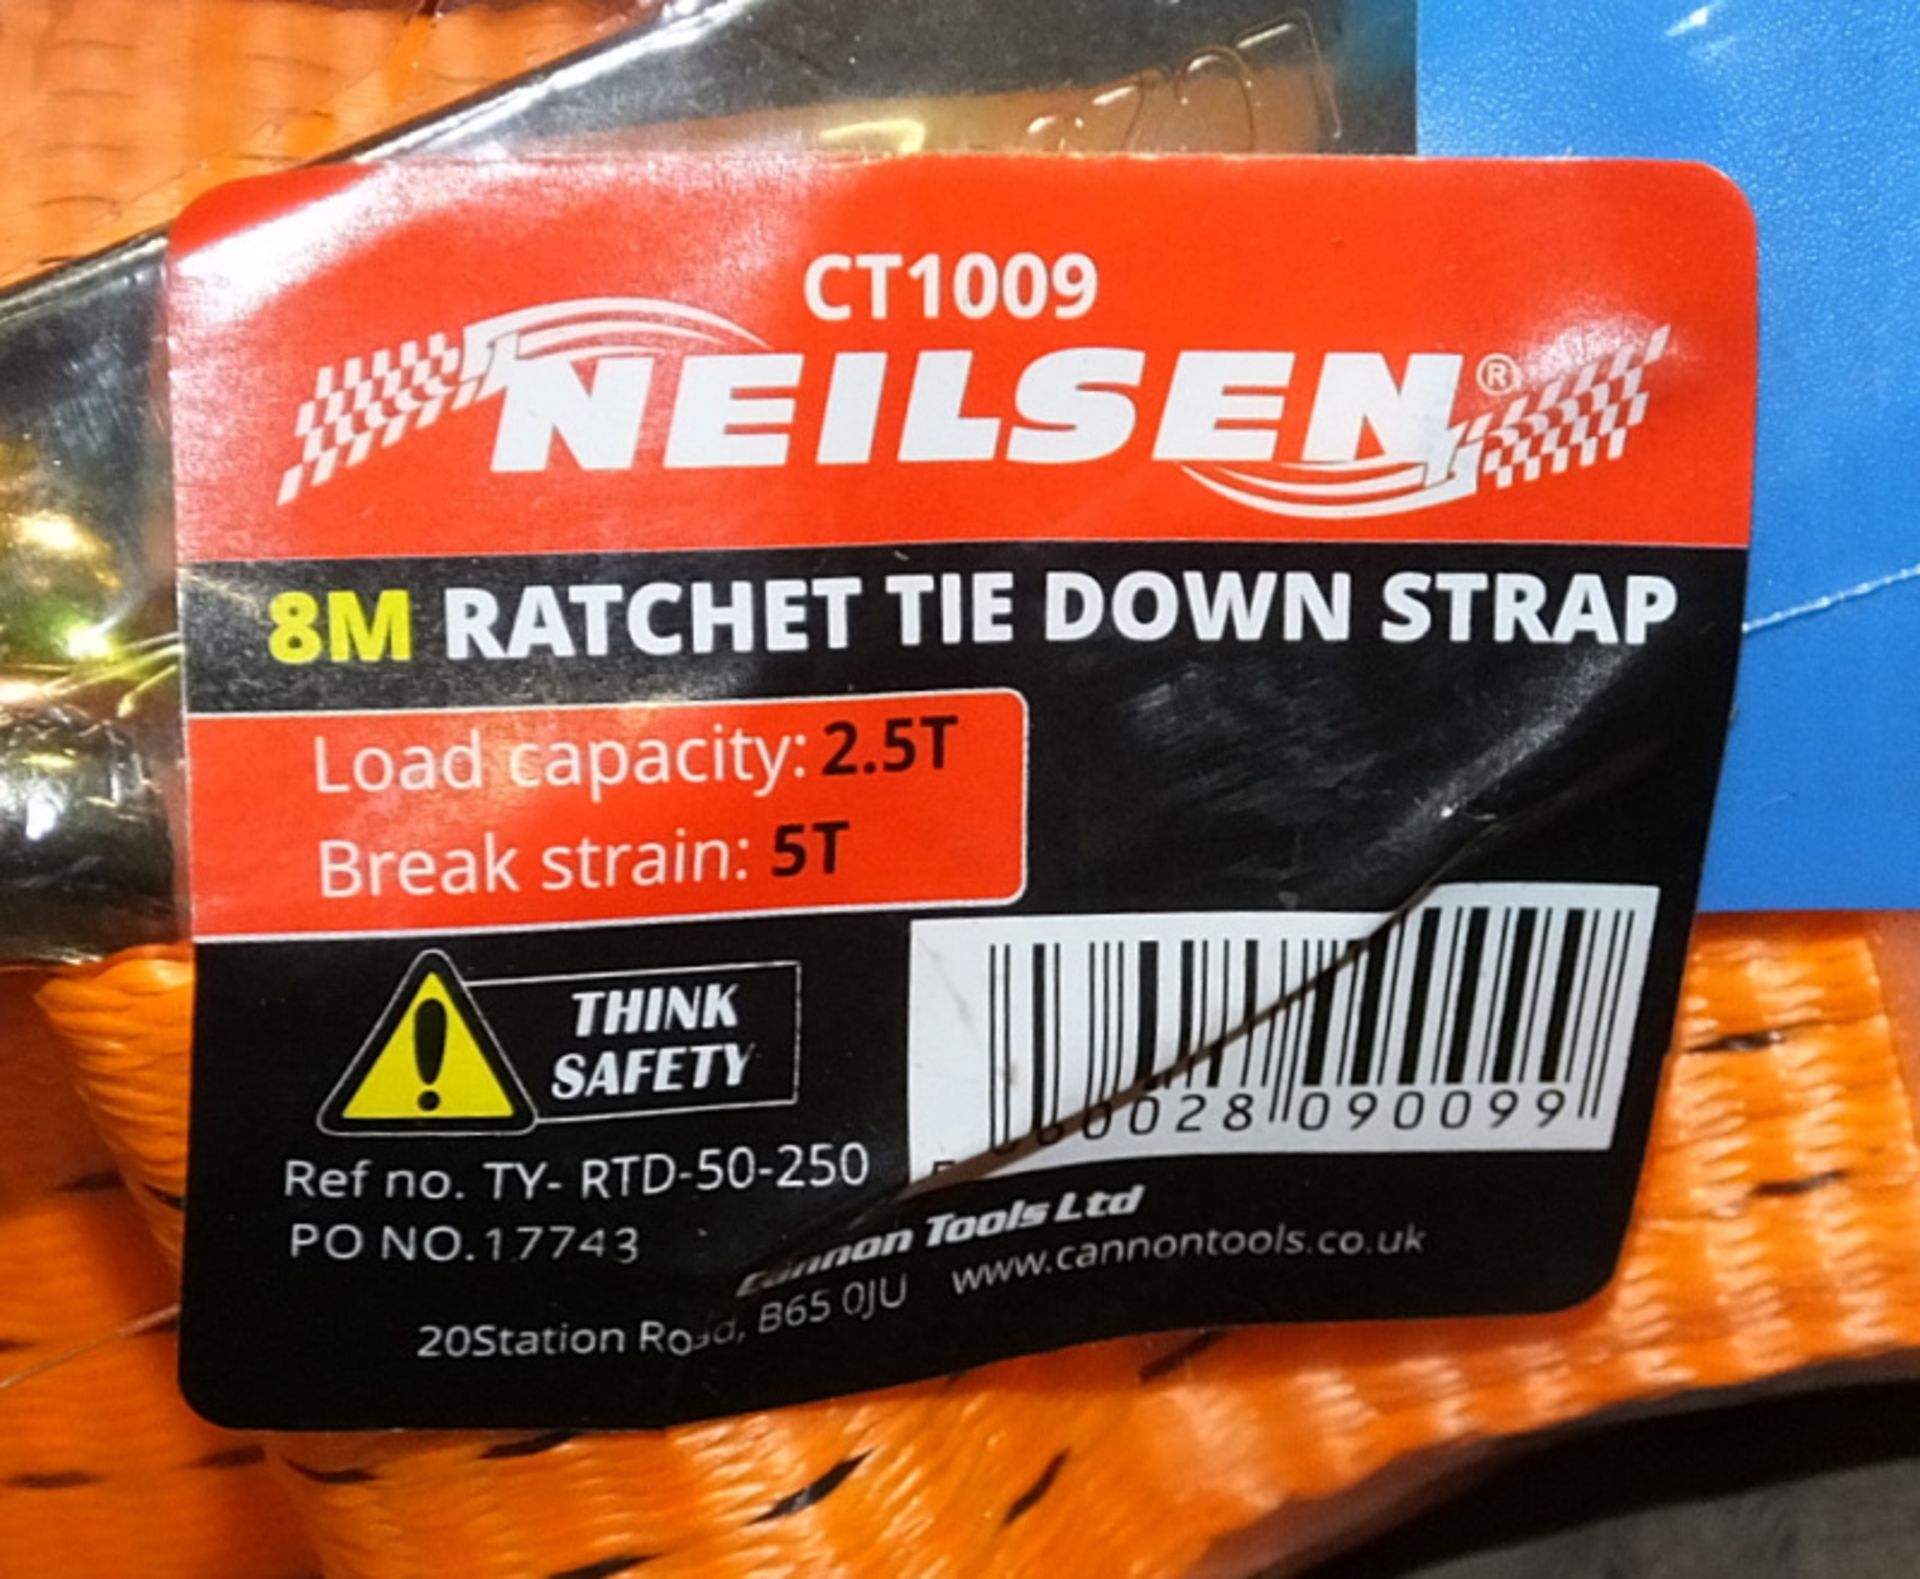 12x Neilsen 8M tie down ratchet tie down straps - CT1009 - Image 3 of 3